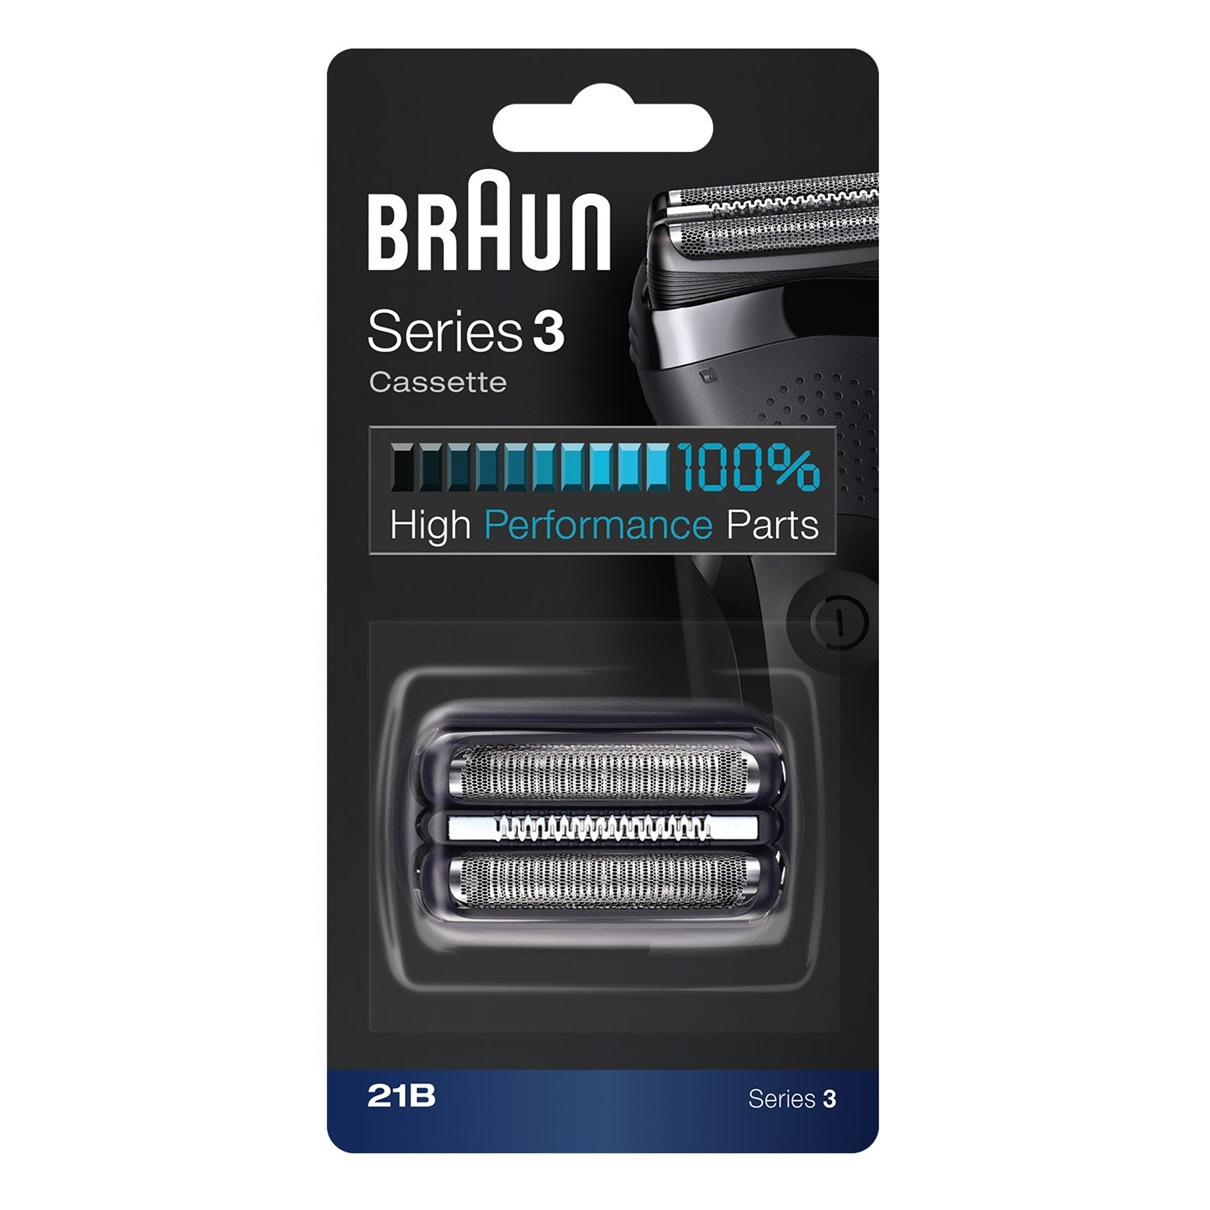 Сетка и режущий блок для бритв Braun 21B сетка и режущий блок cruser 20s 2000 series braun браун 65733762 81253250 81387934